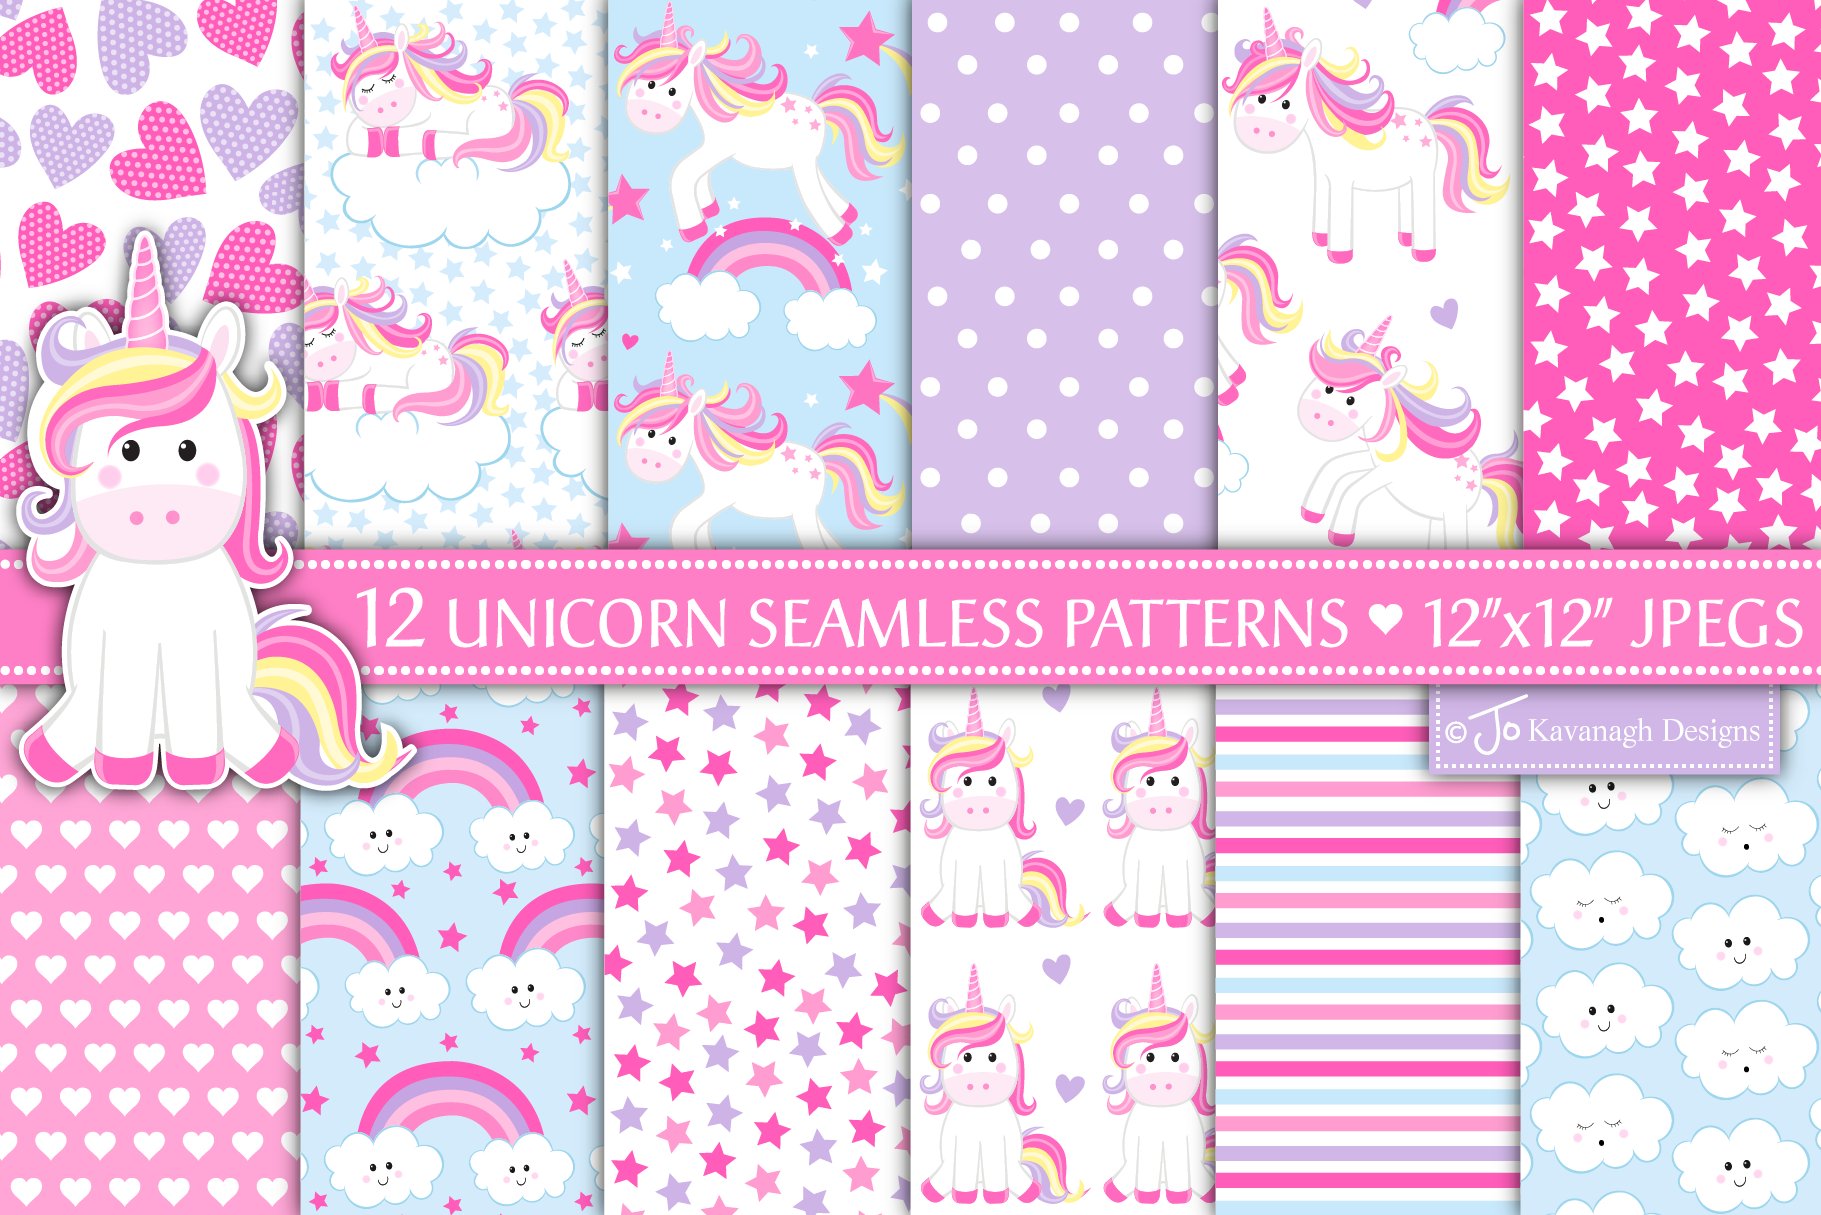 Cute Unicorn Patterns -P28 cover image.